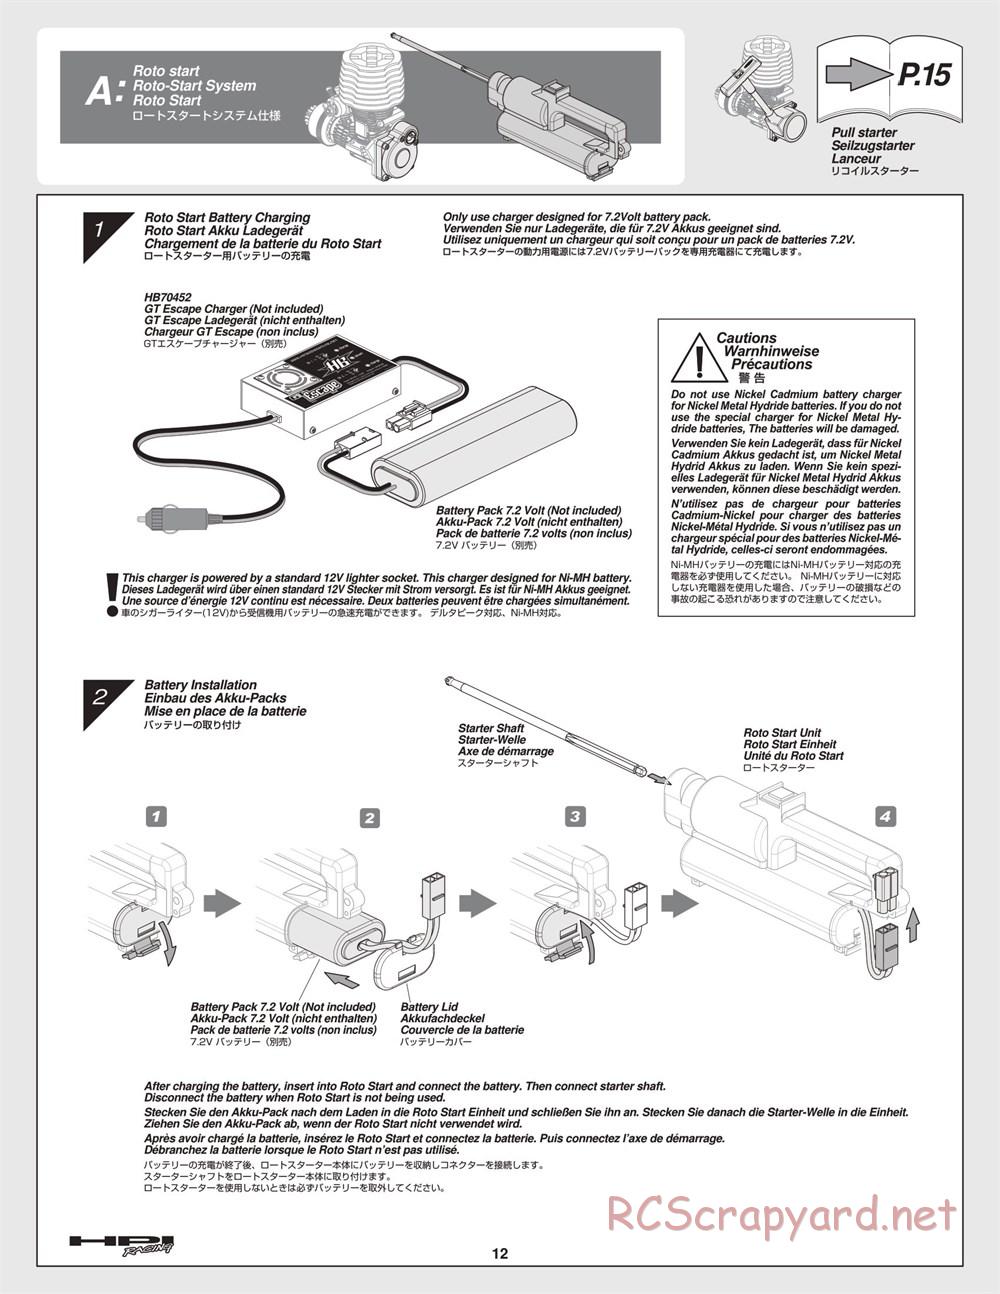 HPI - Nitro MT2 G3.0 - Manual - Page 12